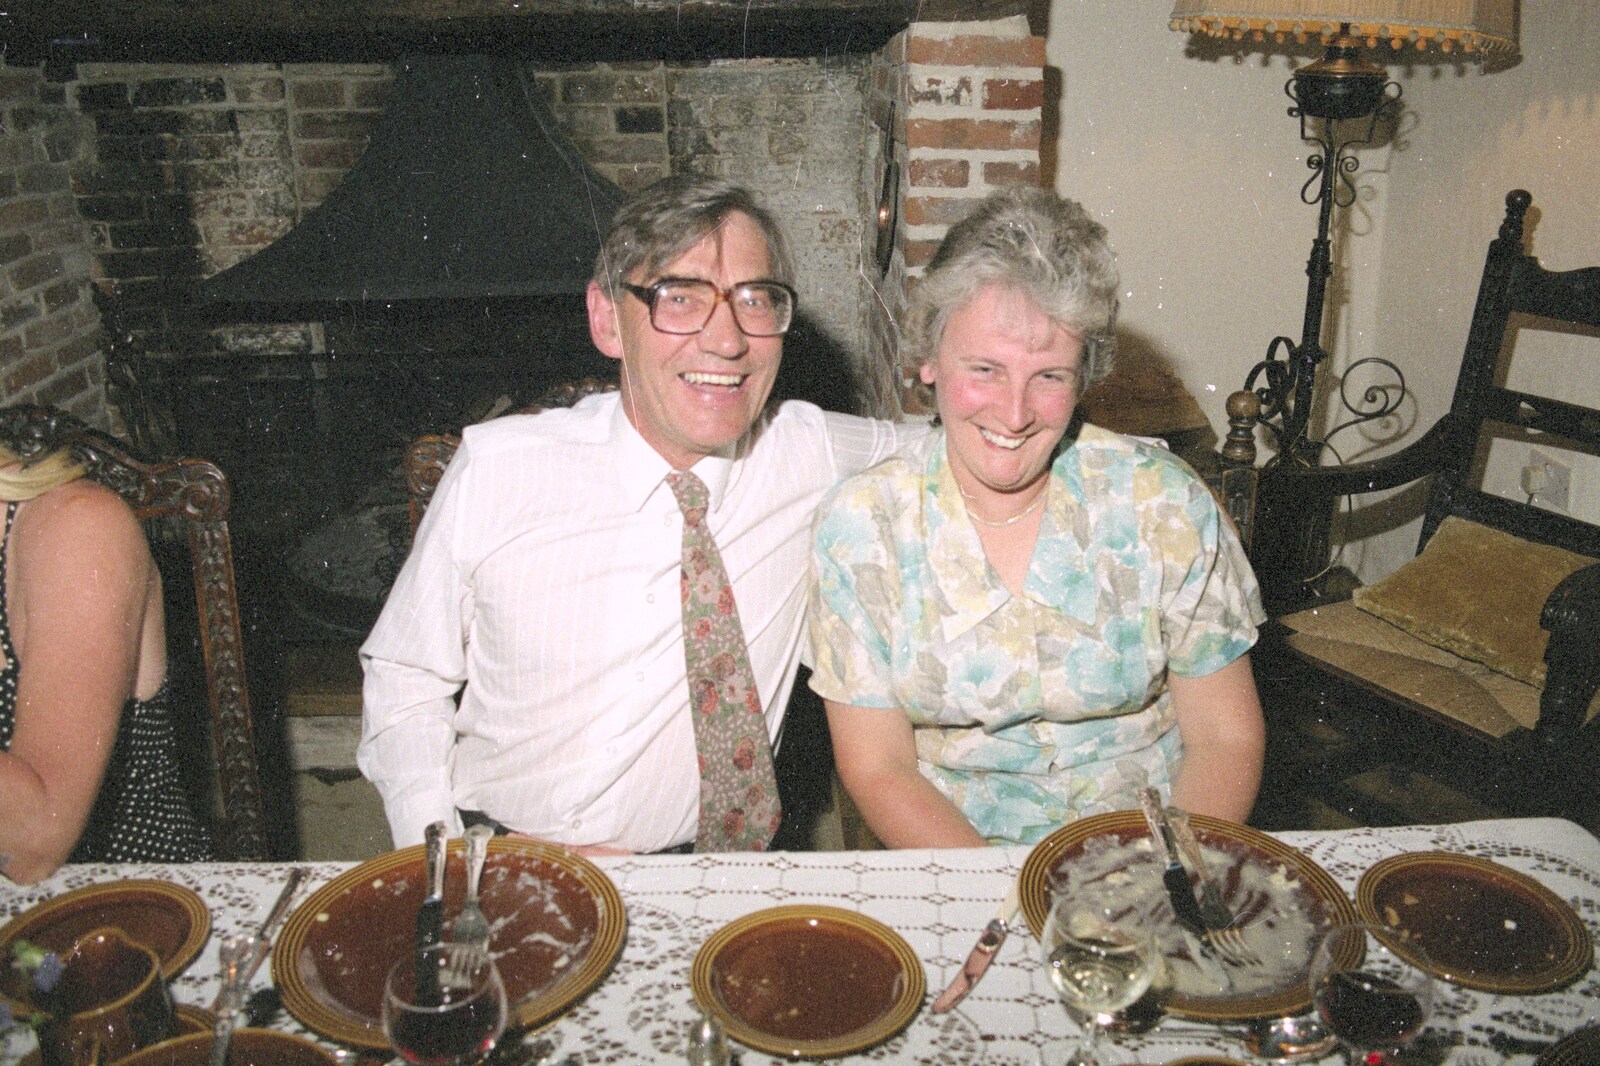 Derek and Linda from Nosher's Dinner Party, Stuston, Suffolk - 14th September 1991